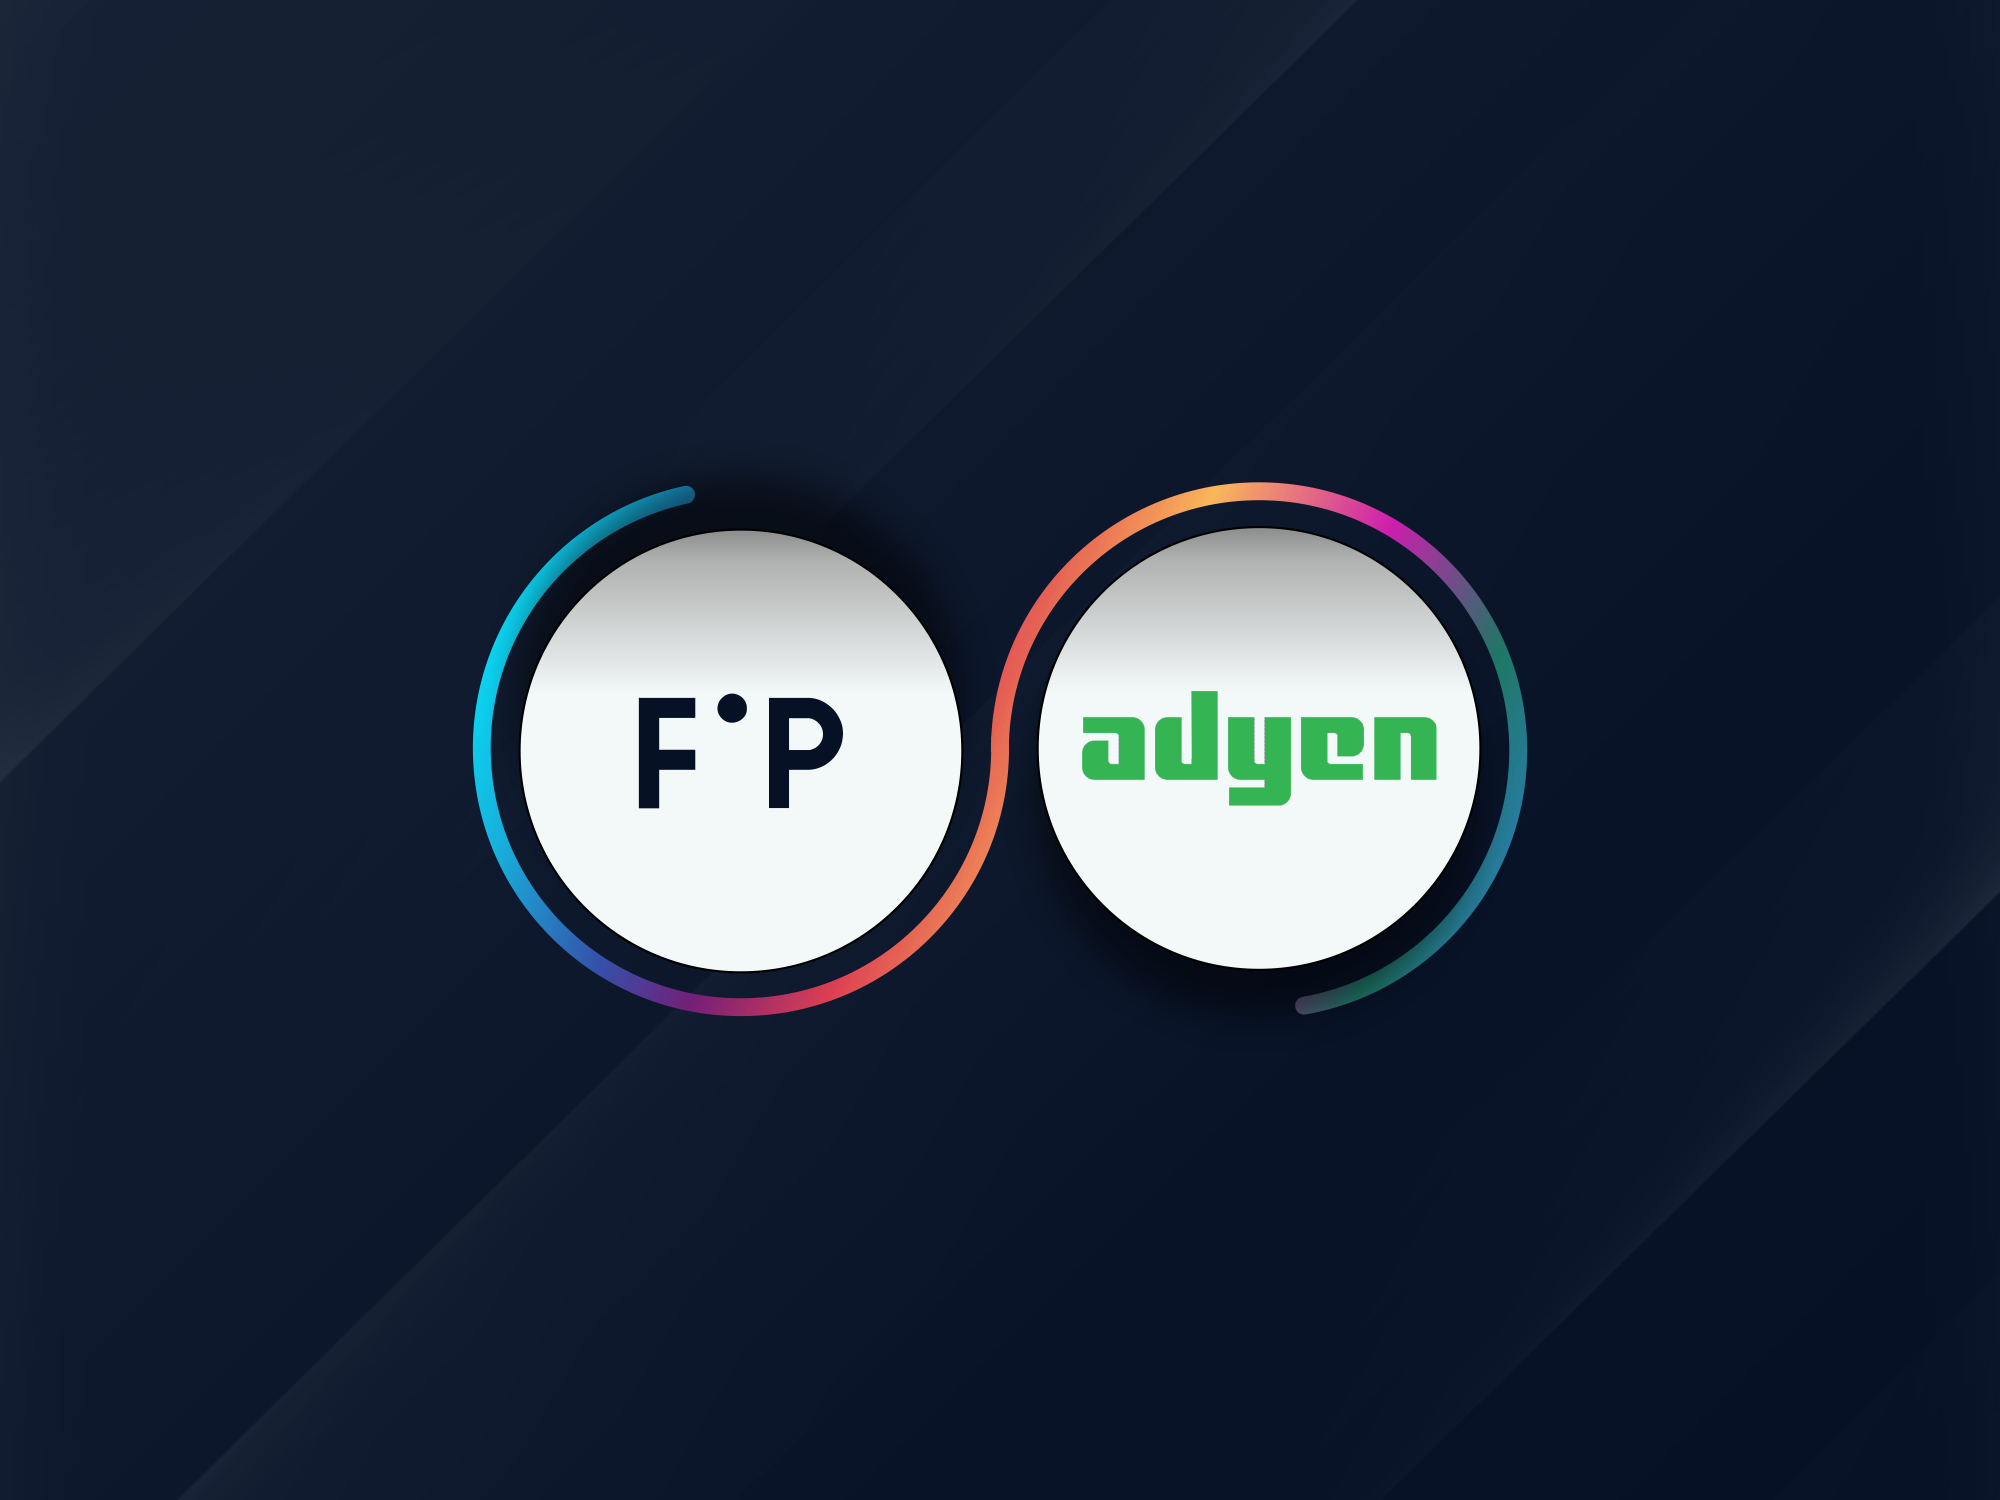 Adyen & Focalpay partnership